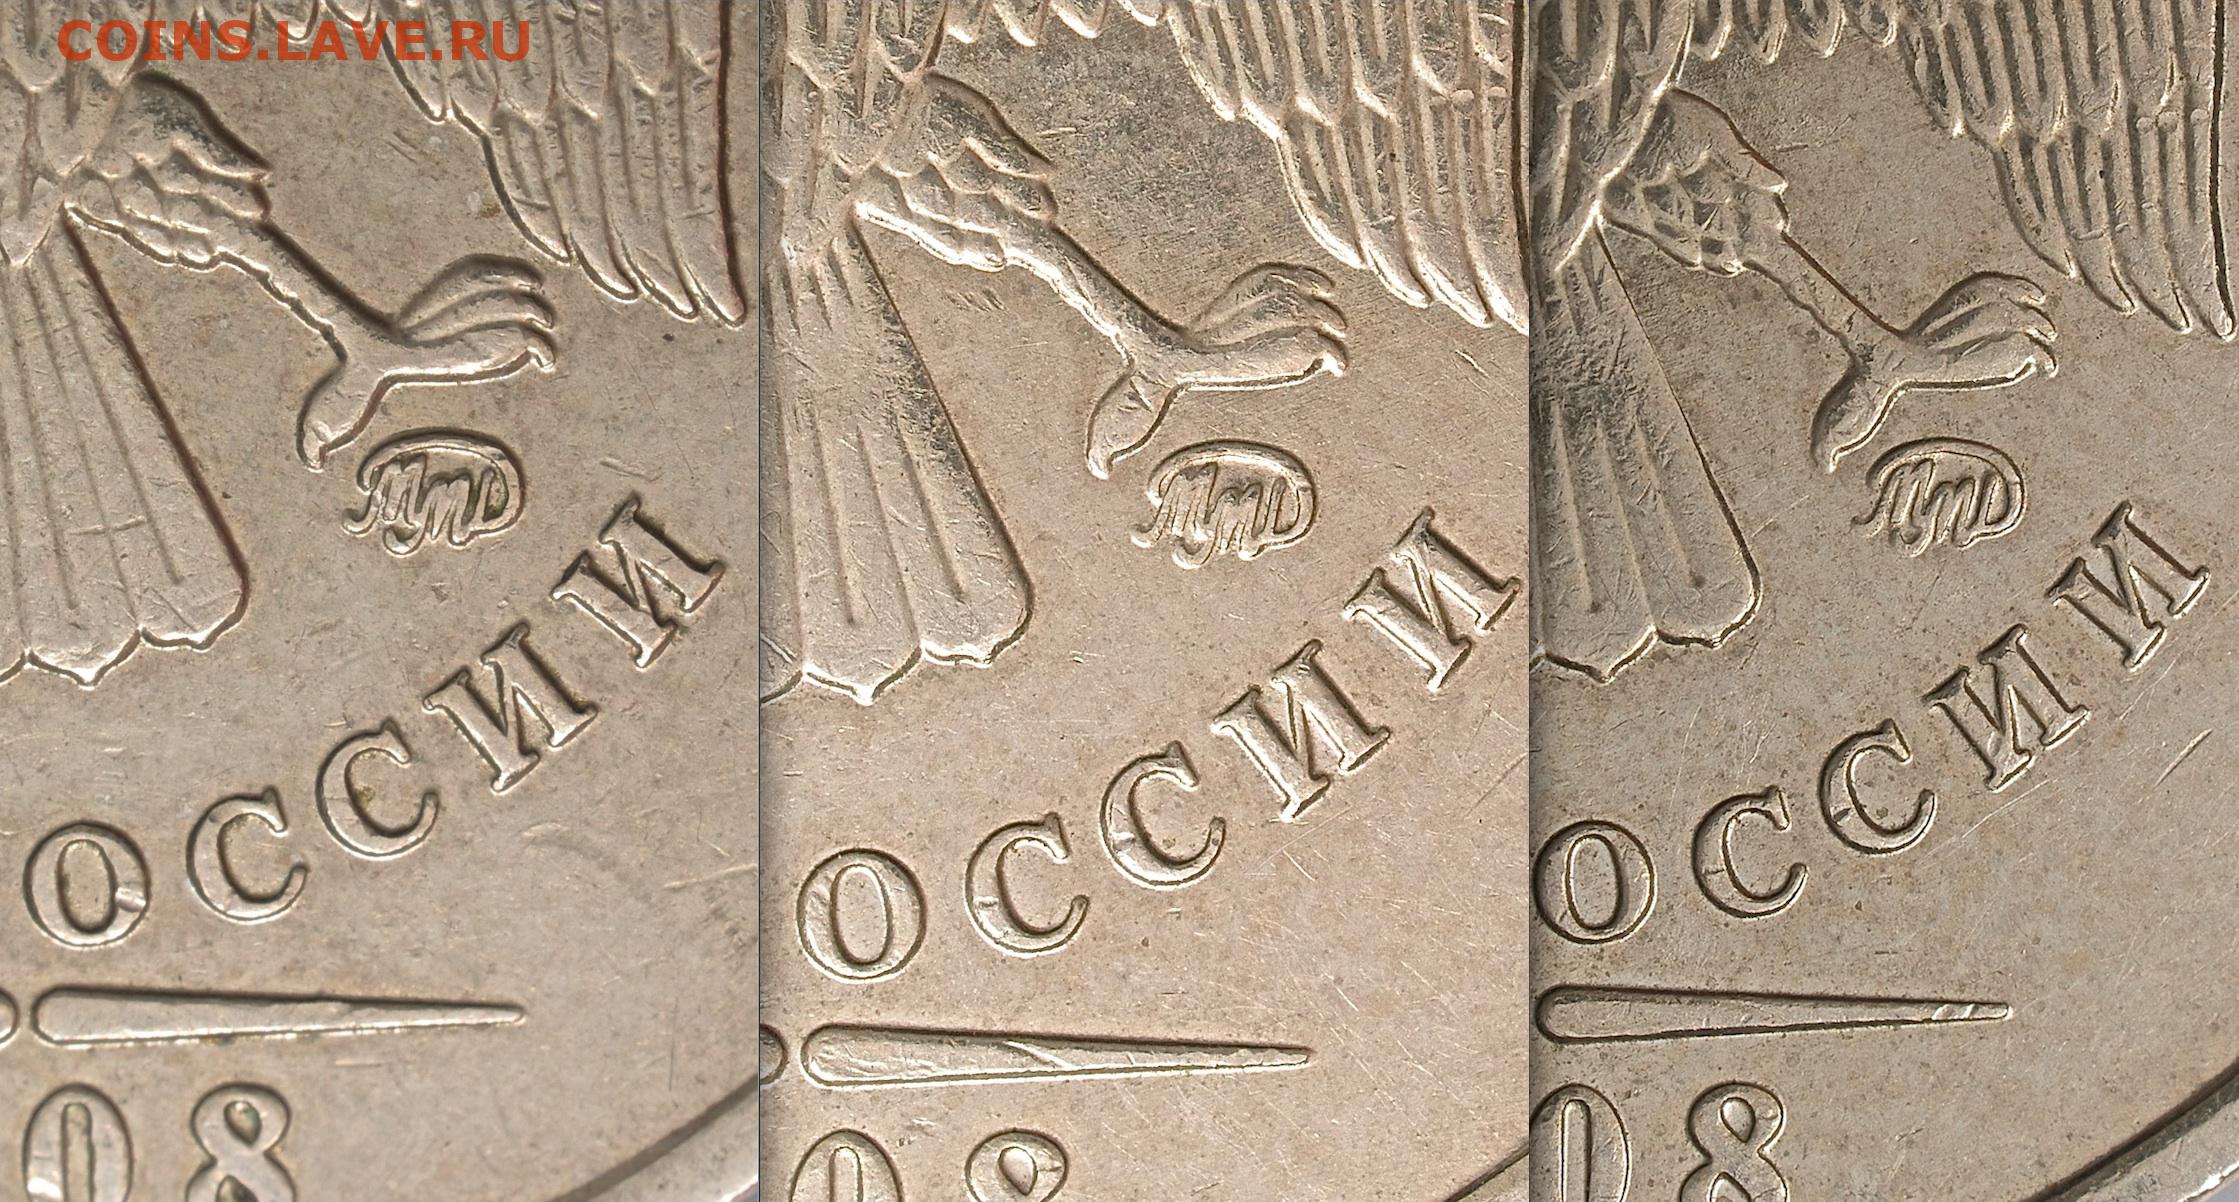 1 Рубль 2008 знак монетного двора